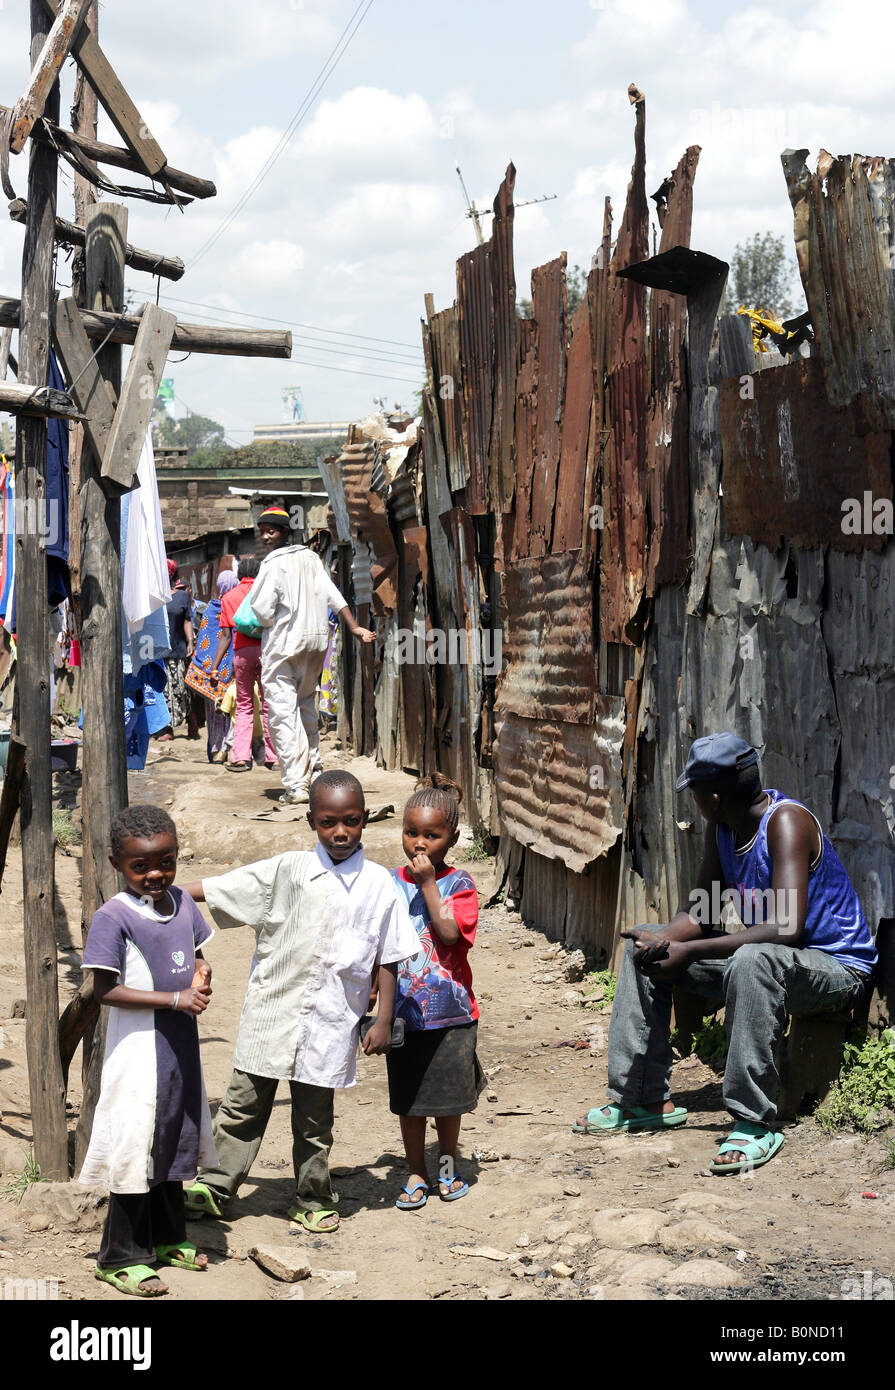 Slum Majengo, one of the most notorious slums in Nairobi, Kenya Stock Photo